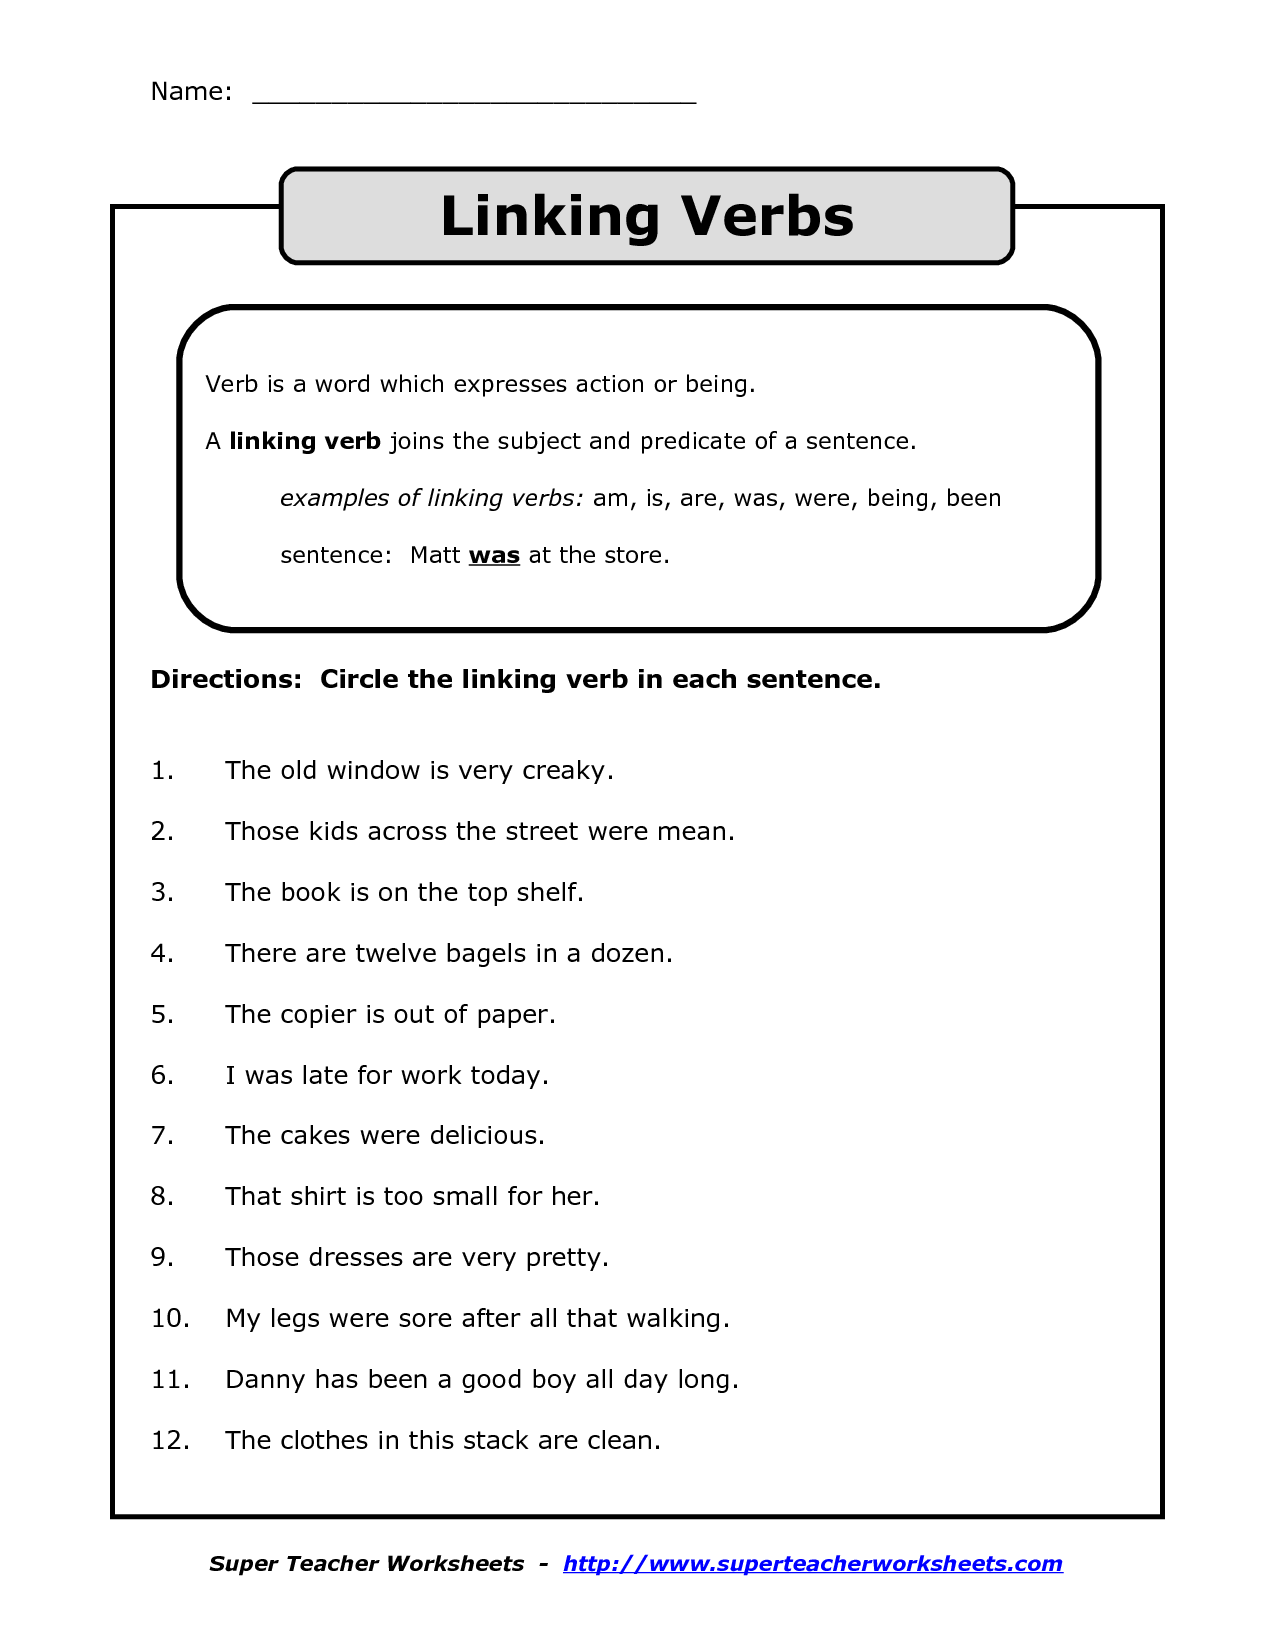 linking-verbs-anchor-chart-linking-verbs-linking-verbs-worksheet-verbs-anchor-chart